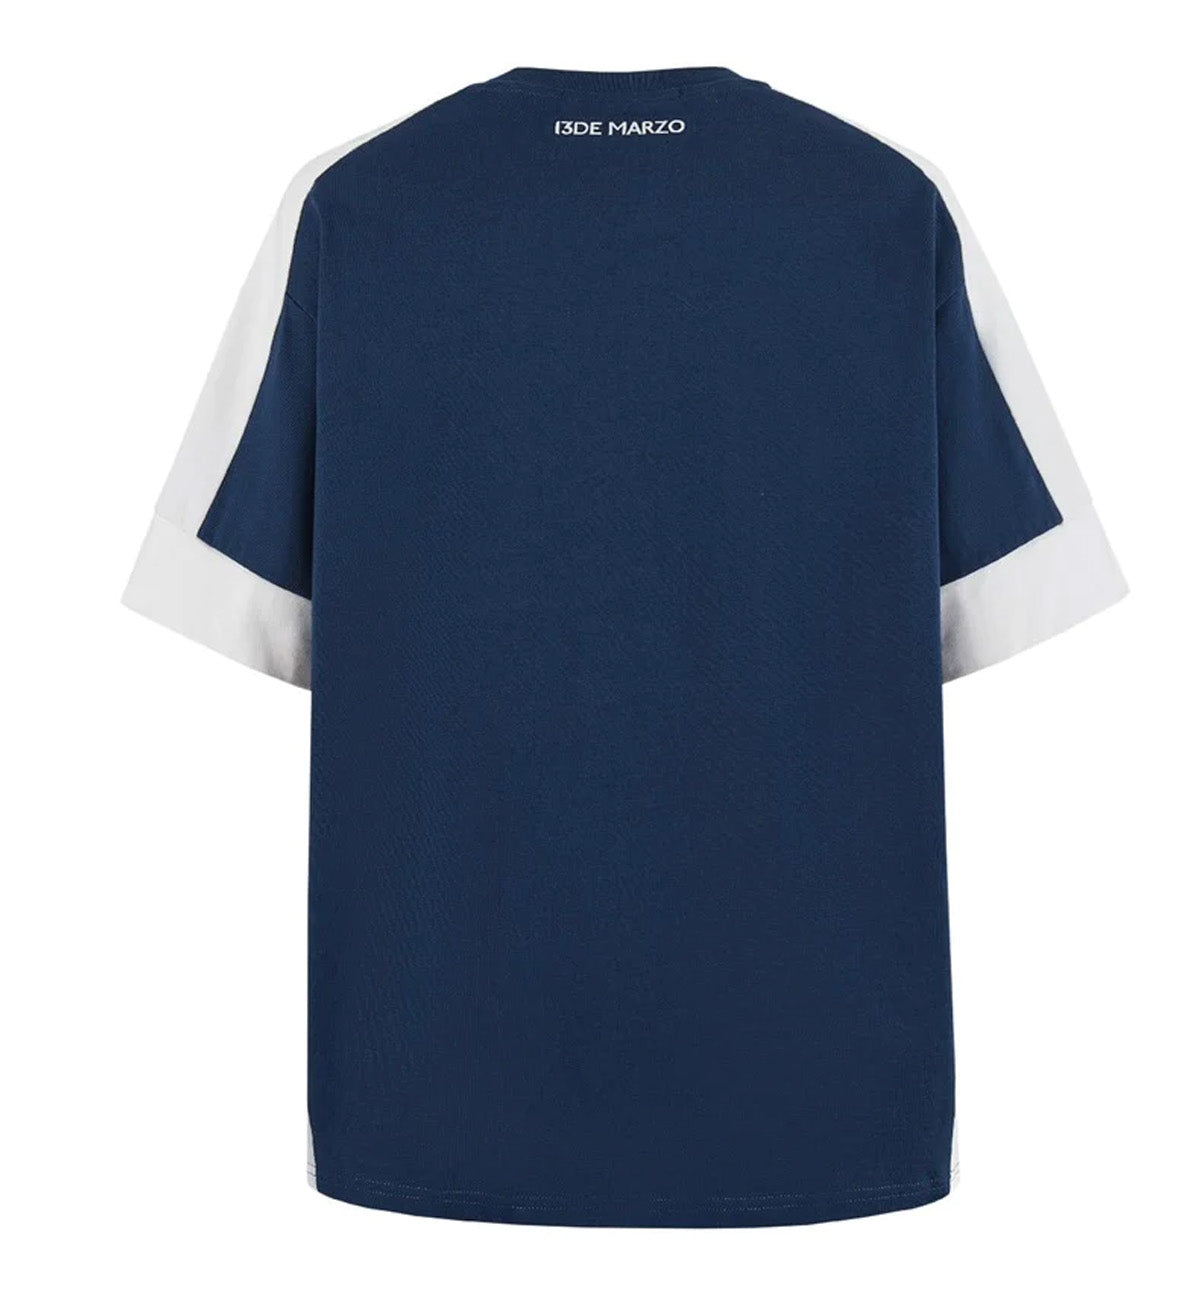 13DE MARZO SS23 Hook&Loop Logo T-Shirt Blue